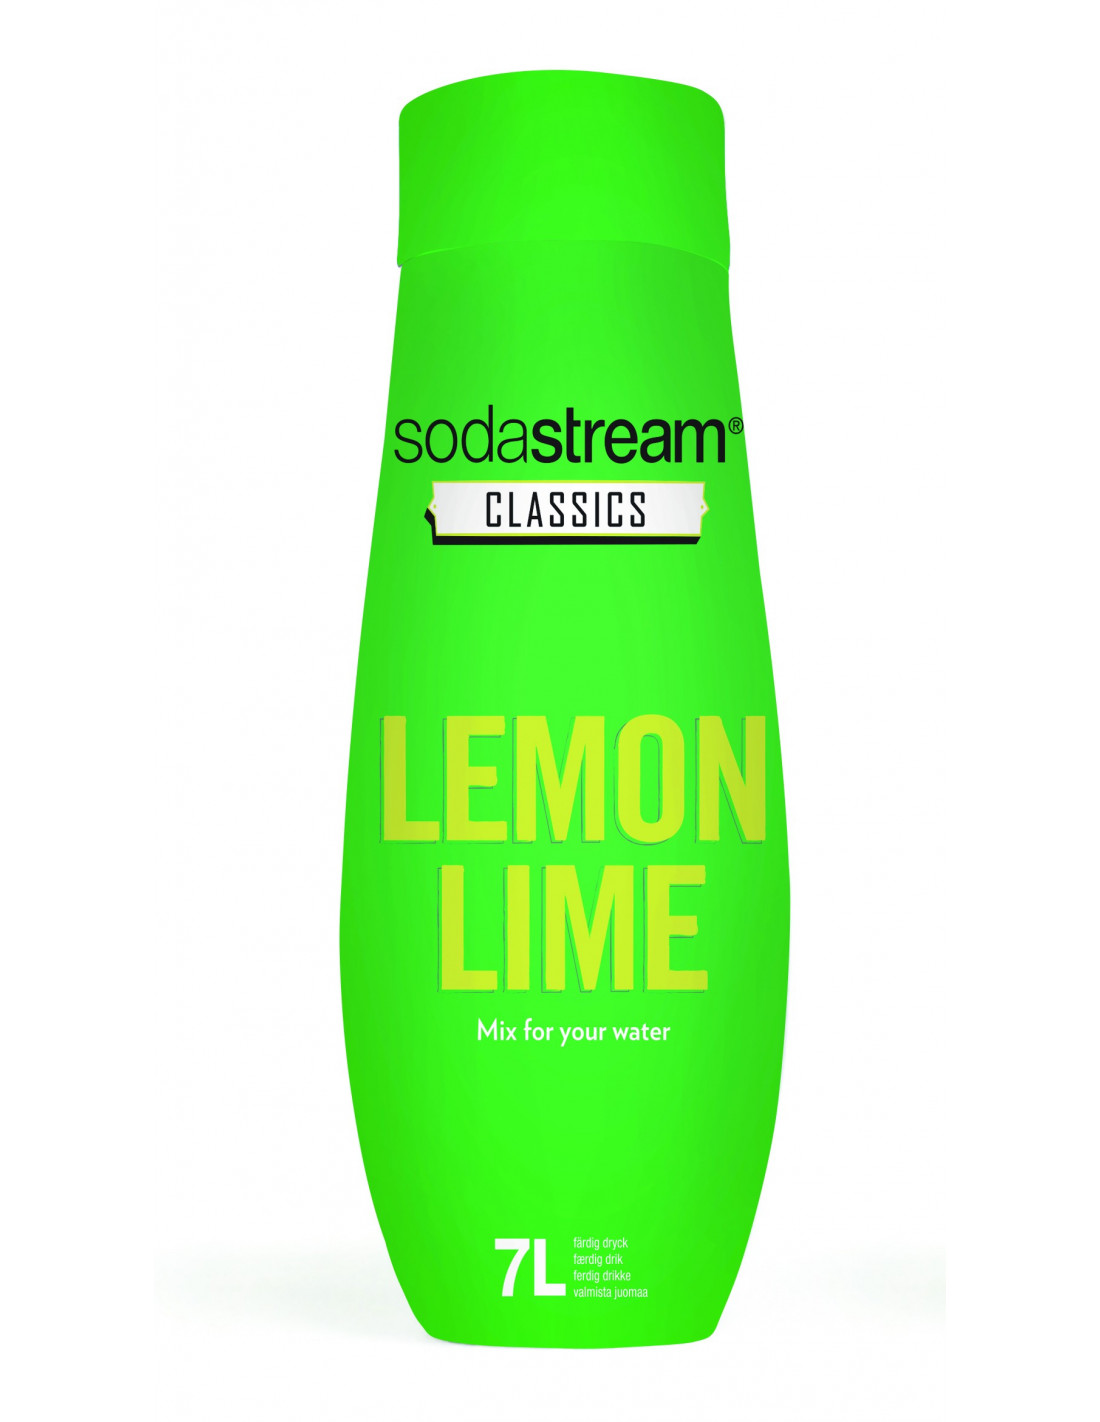 https://purificaigua.es/550-thickbox_default/sodastream-sabor-classic-lima-limon-440ml.jpg